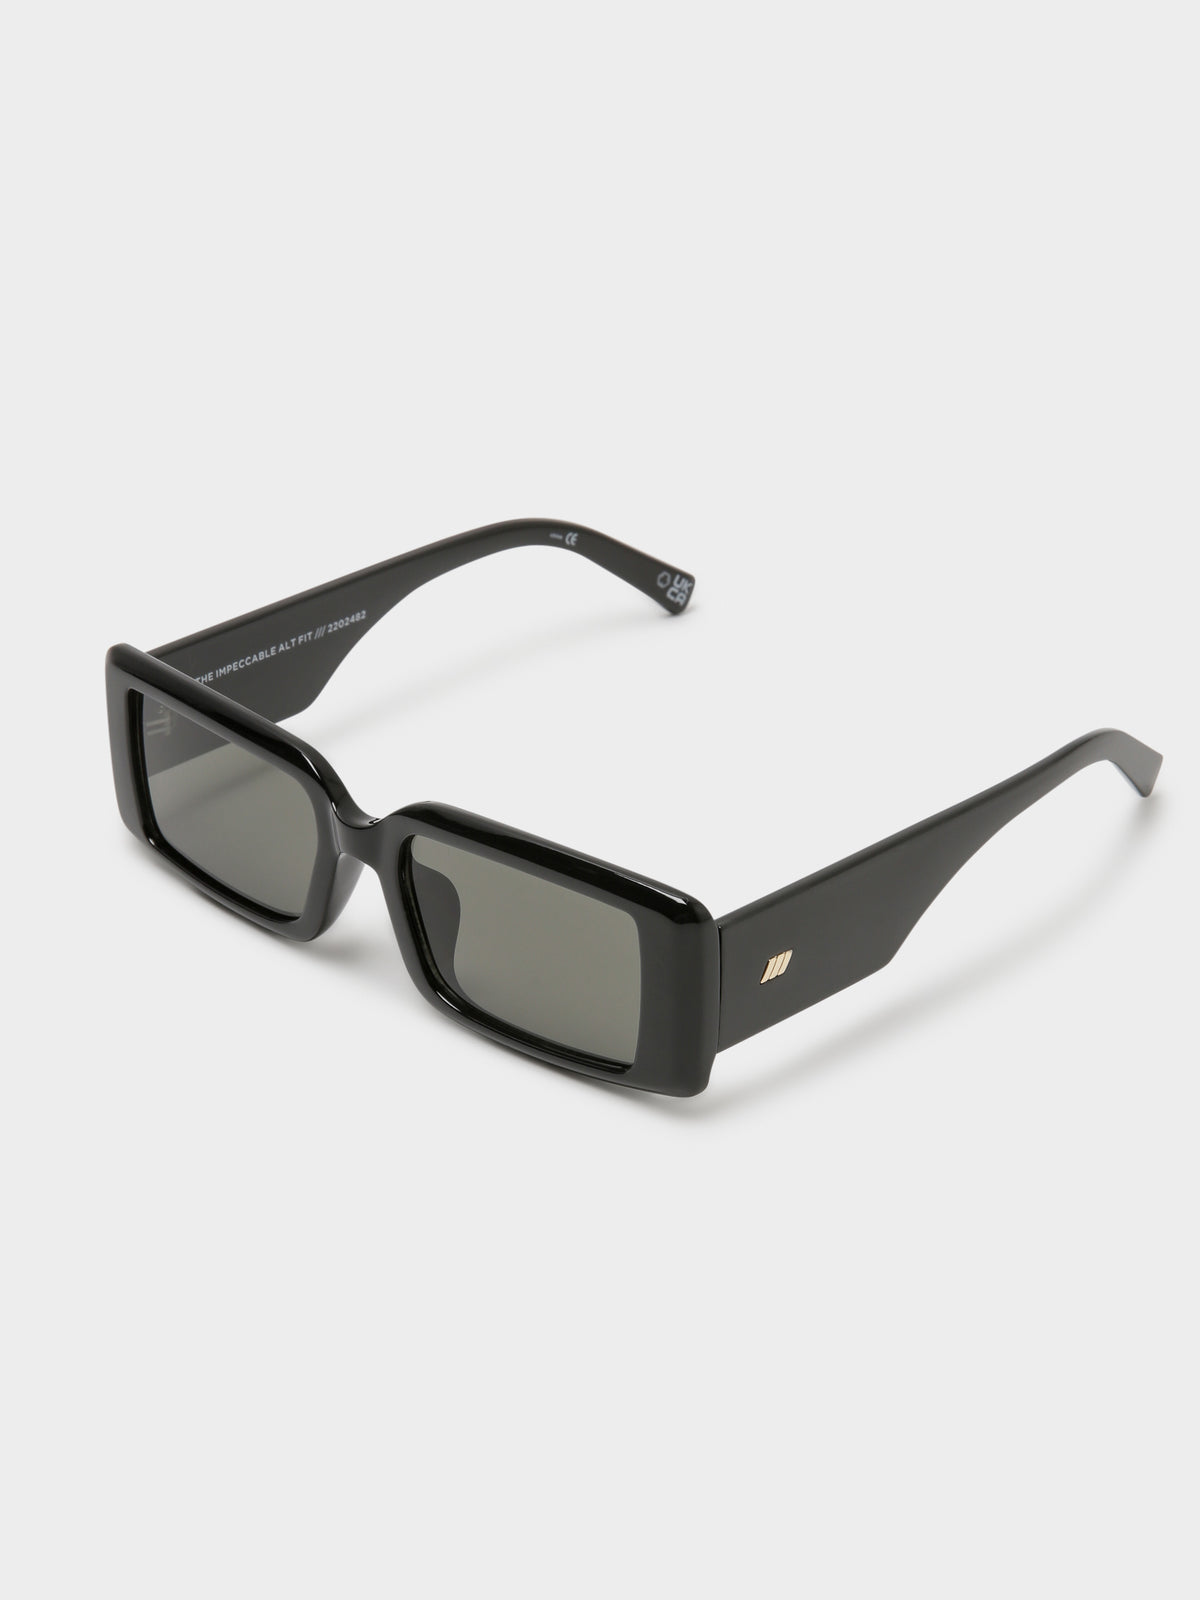 The Impeccable Alt Fit Sunglasses in Black